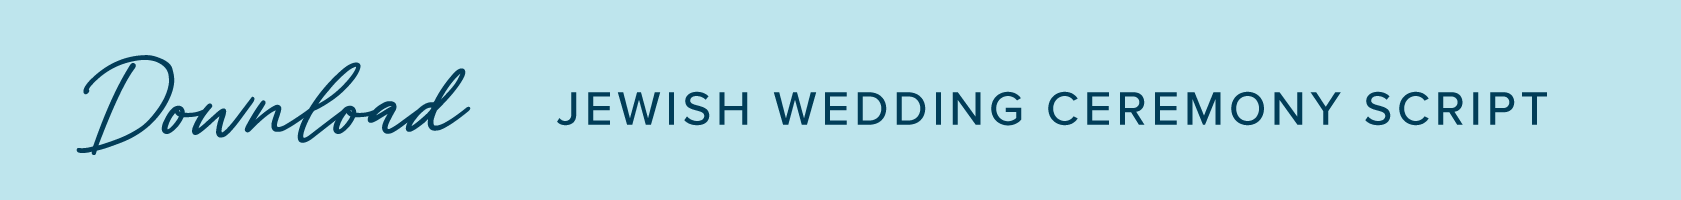 jewish-wedding-ceremony-script-button